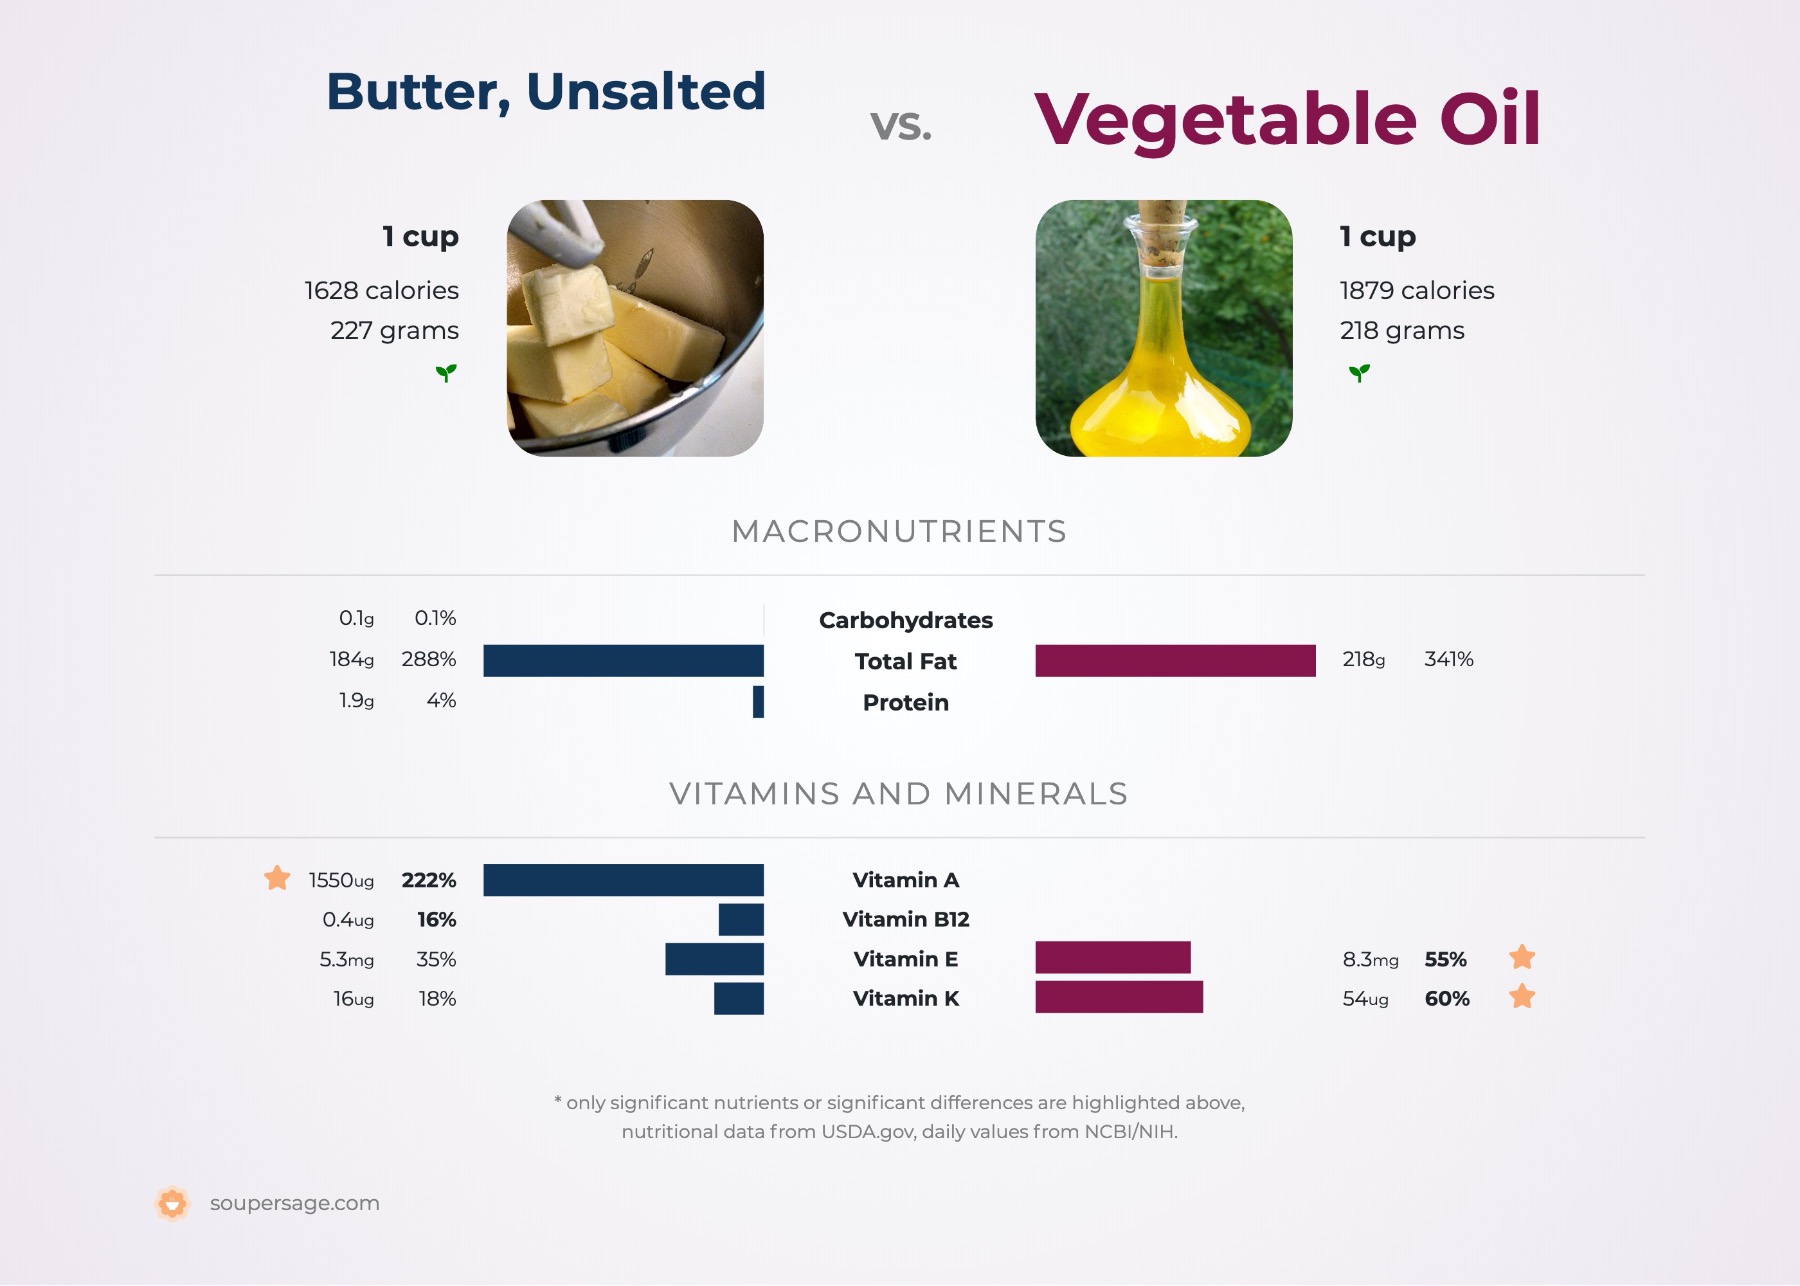 nutrition comparison of butter, unsalted vs. vegetable oil